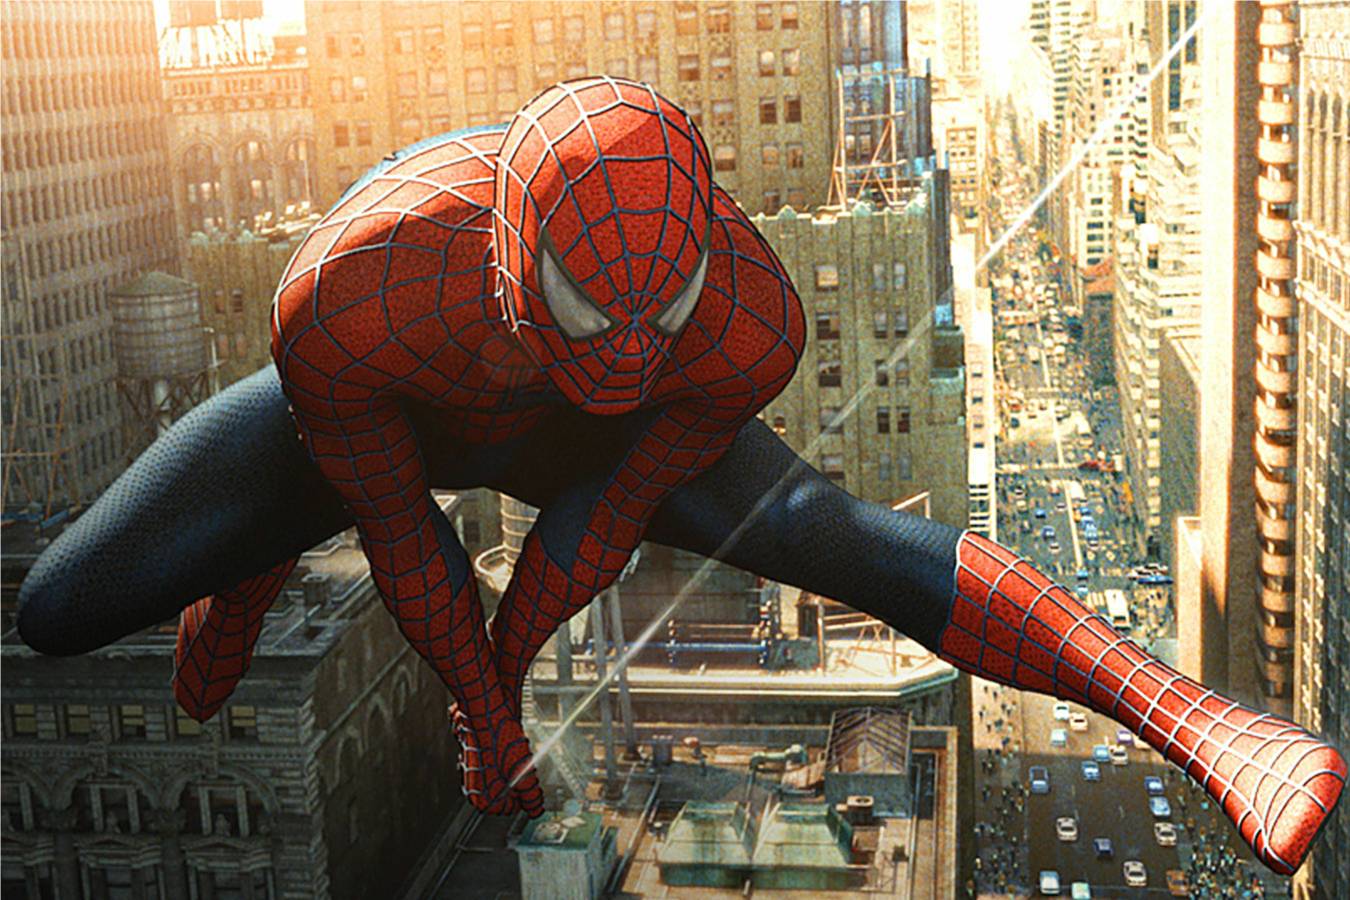 Wallpaper Puter Spiderman